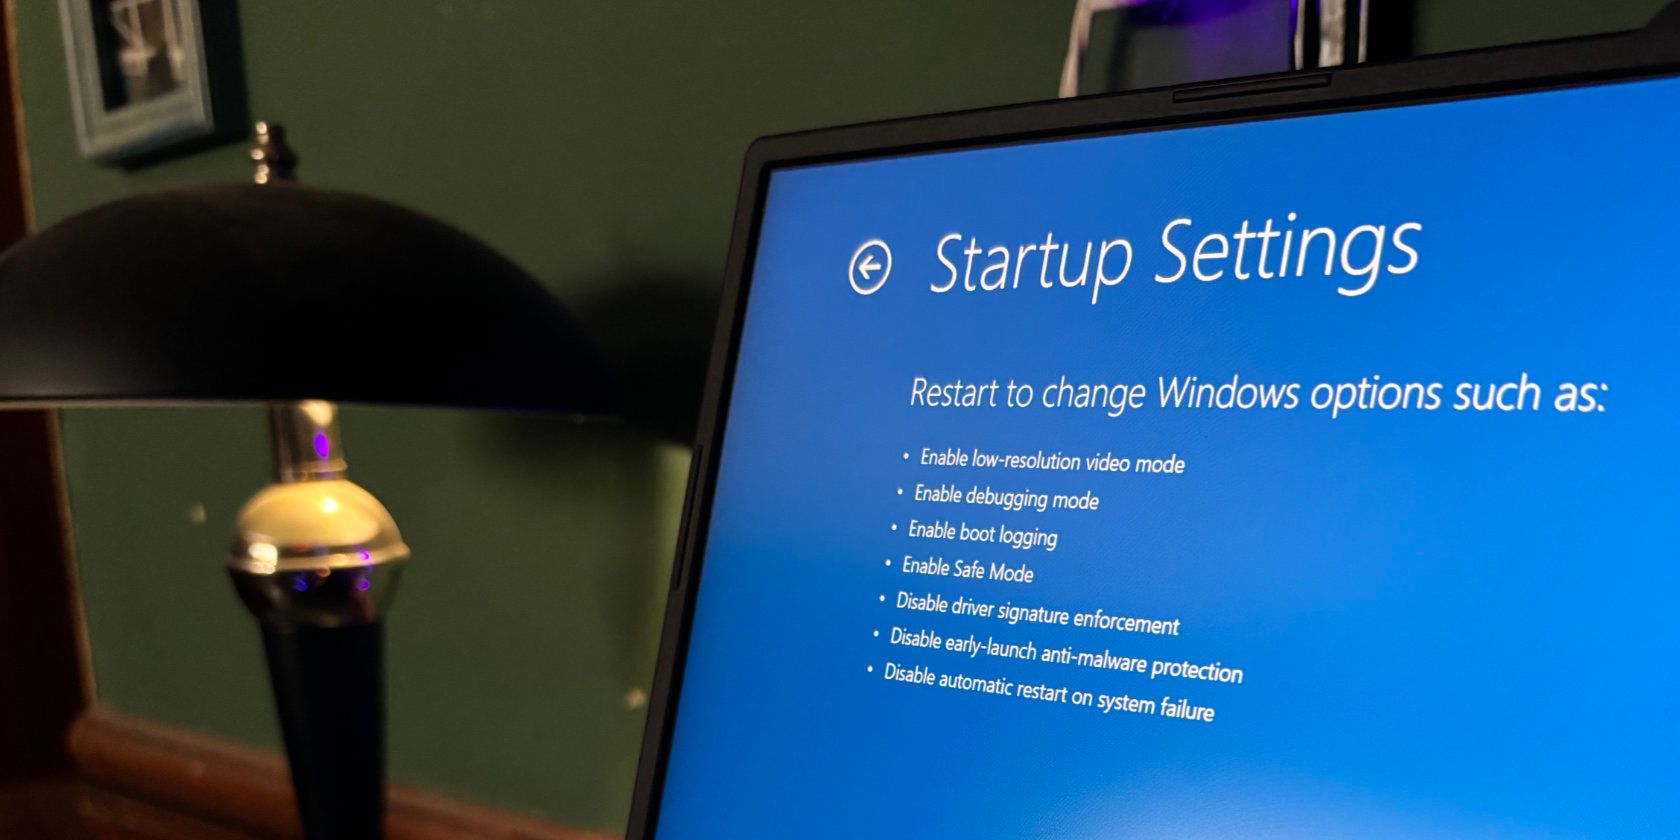 Startup settings for Windows 11